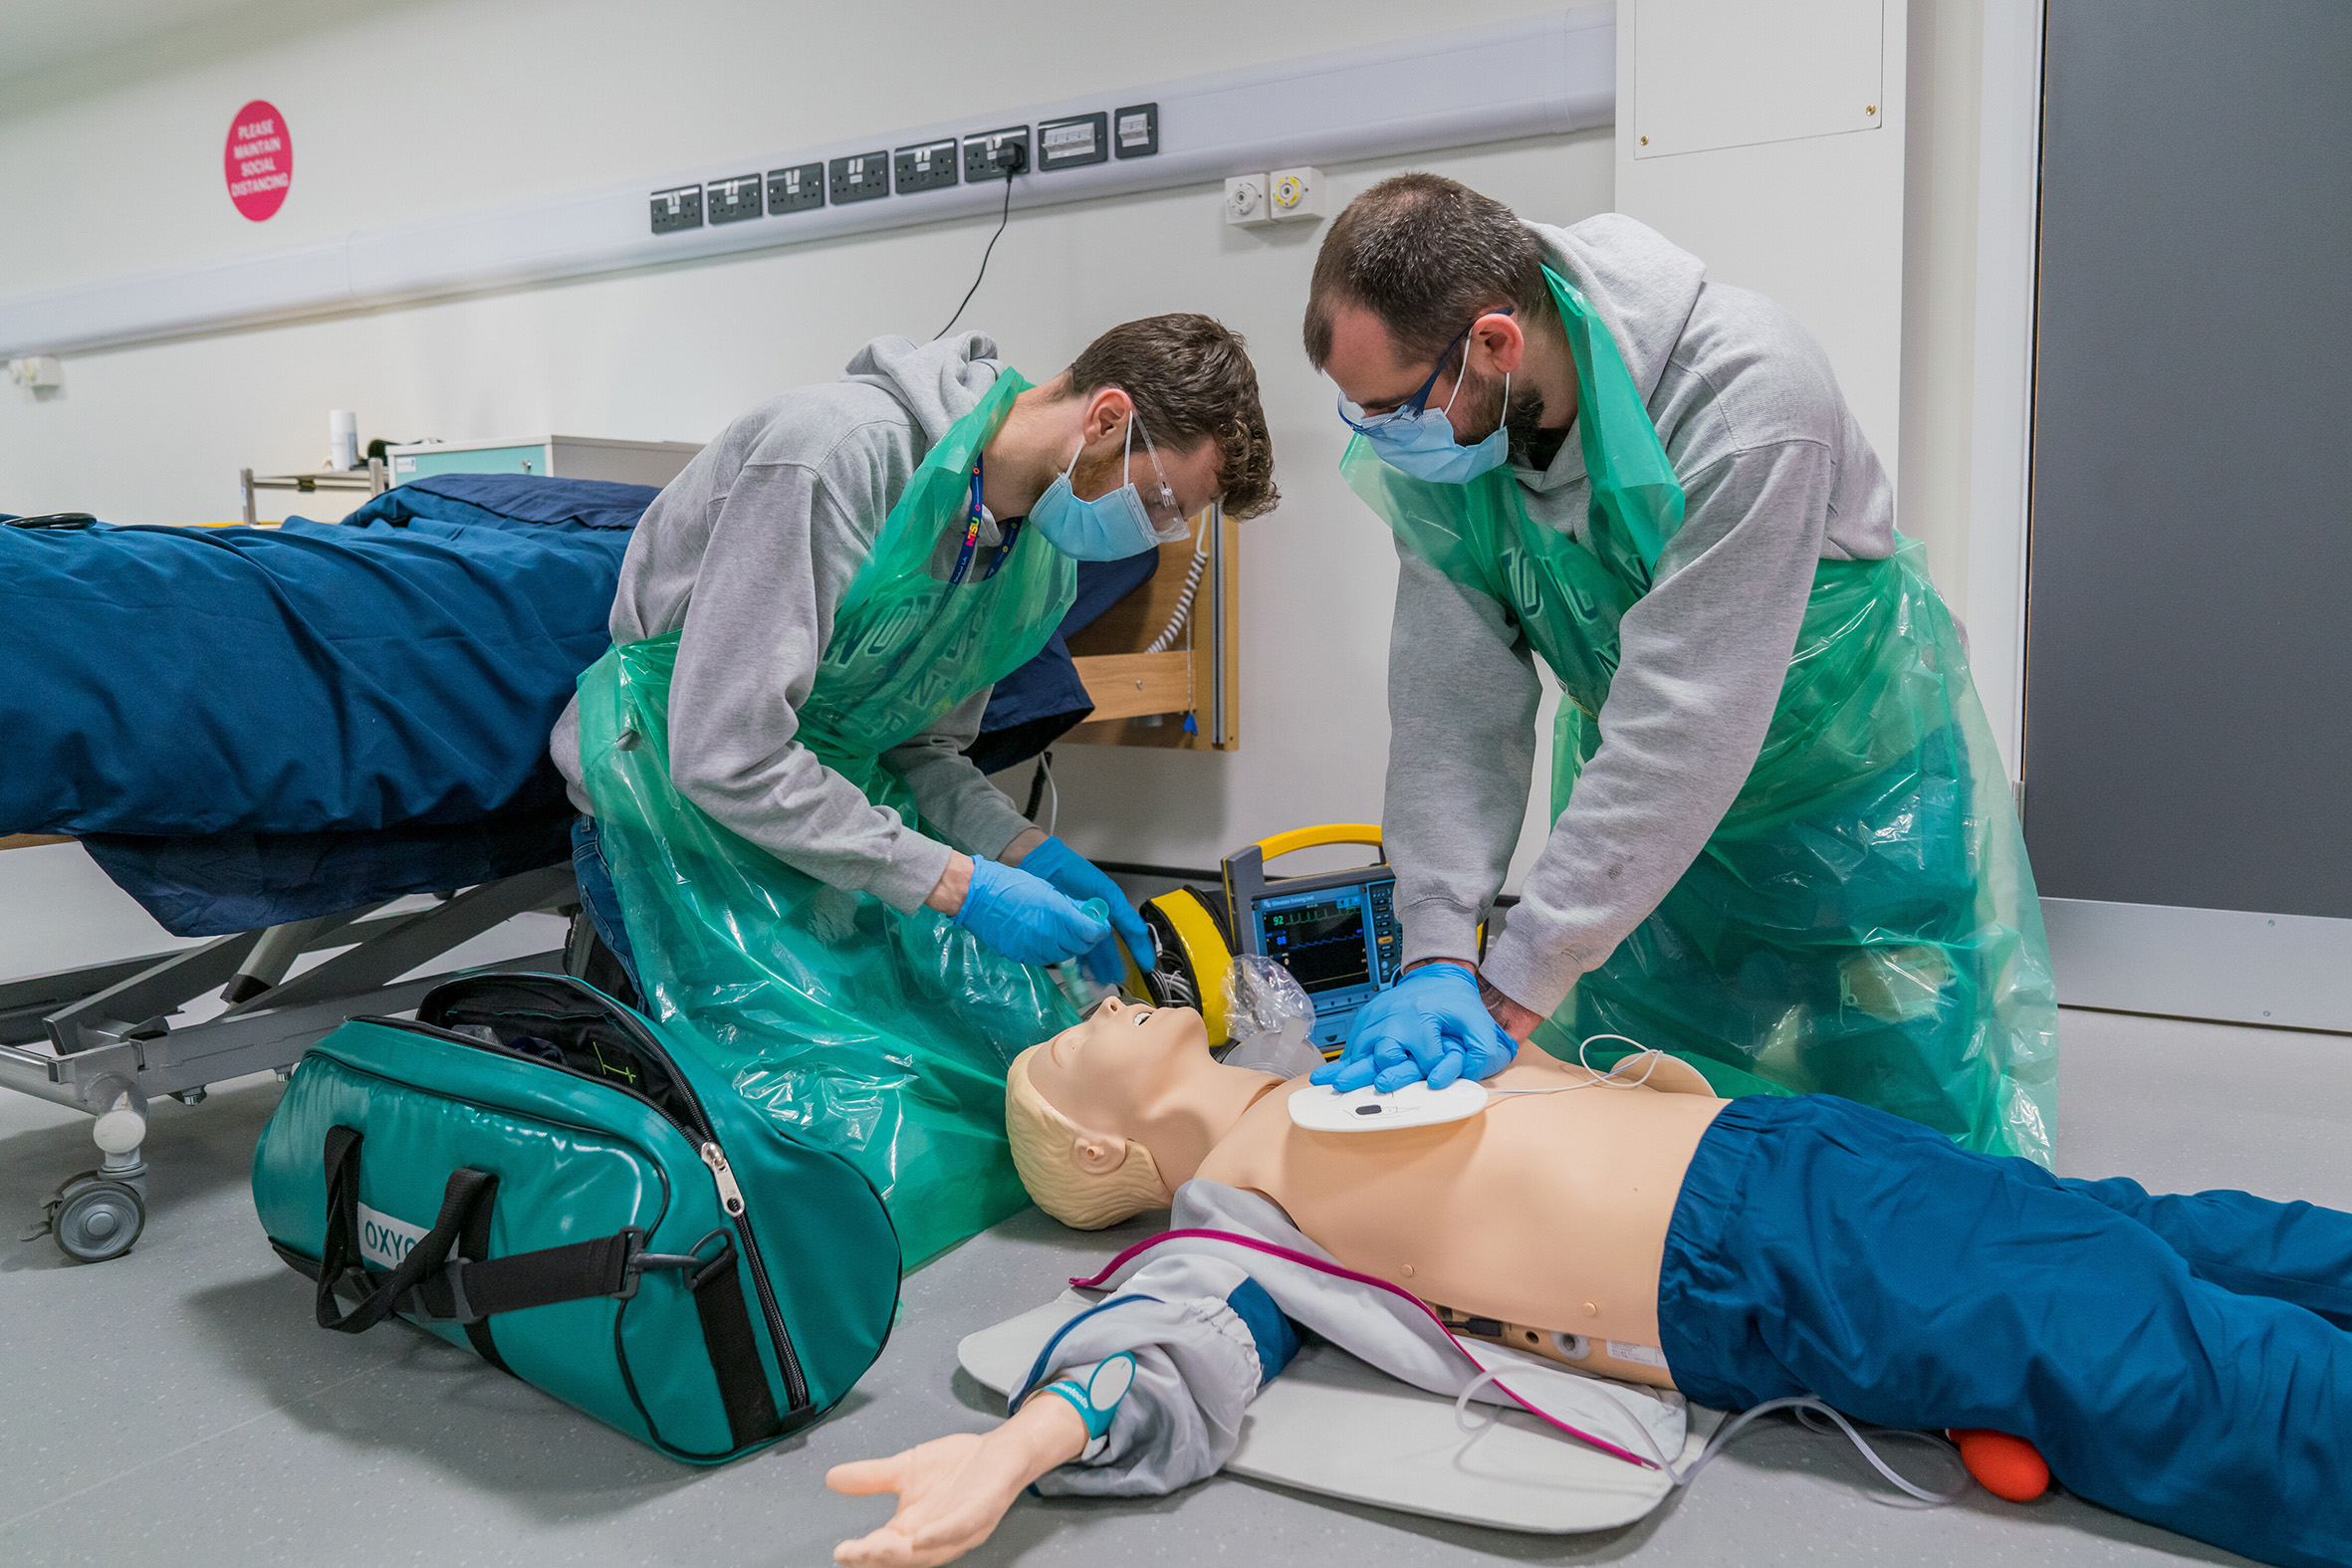 NTU has a broad range of medical training facilities and equipment